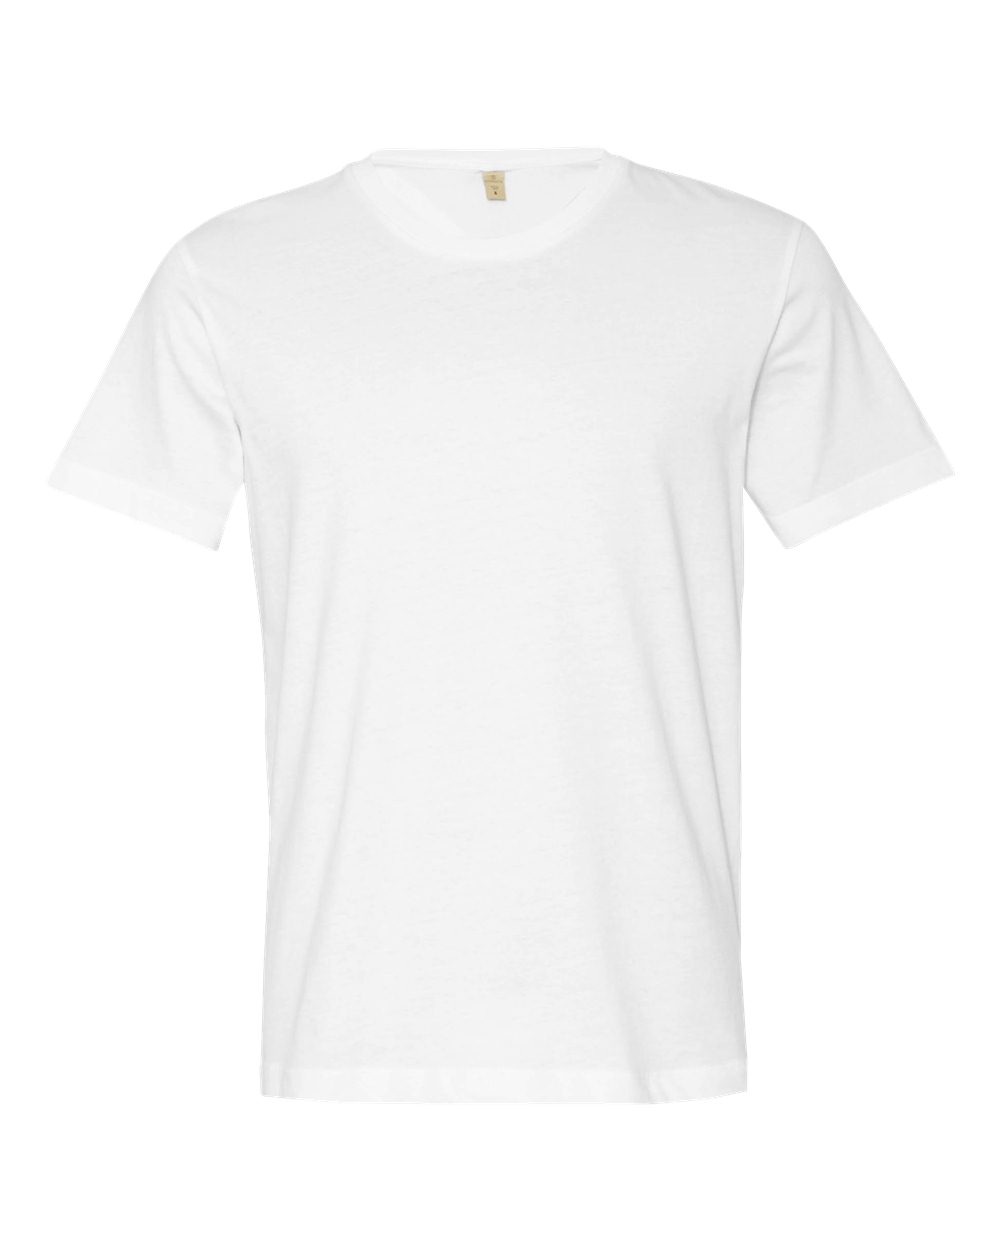 Alternative 1070 - Go-To Tee $5.82 - Men's T-Shirts